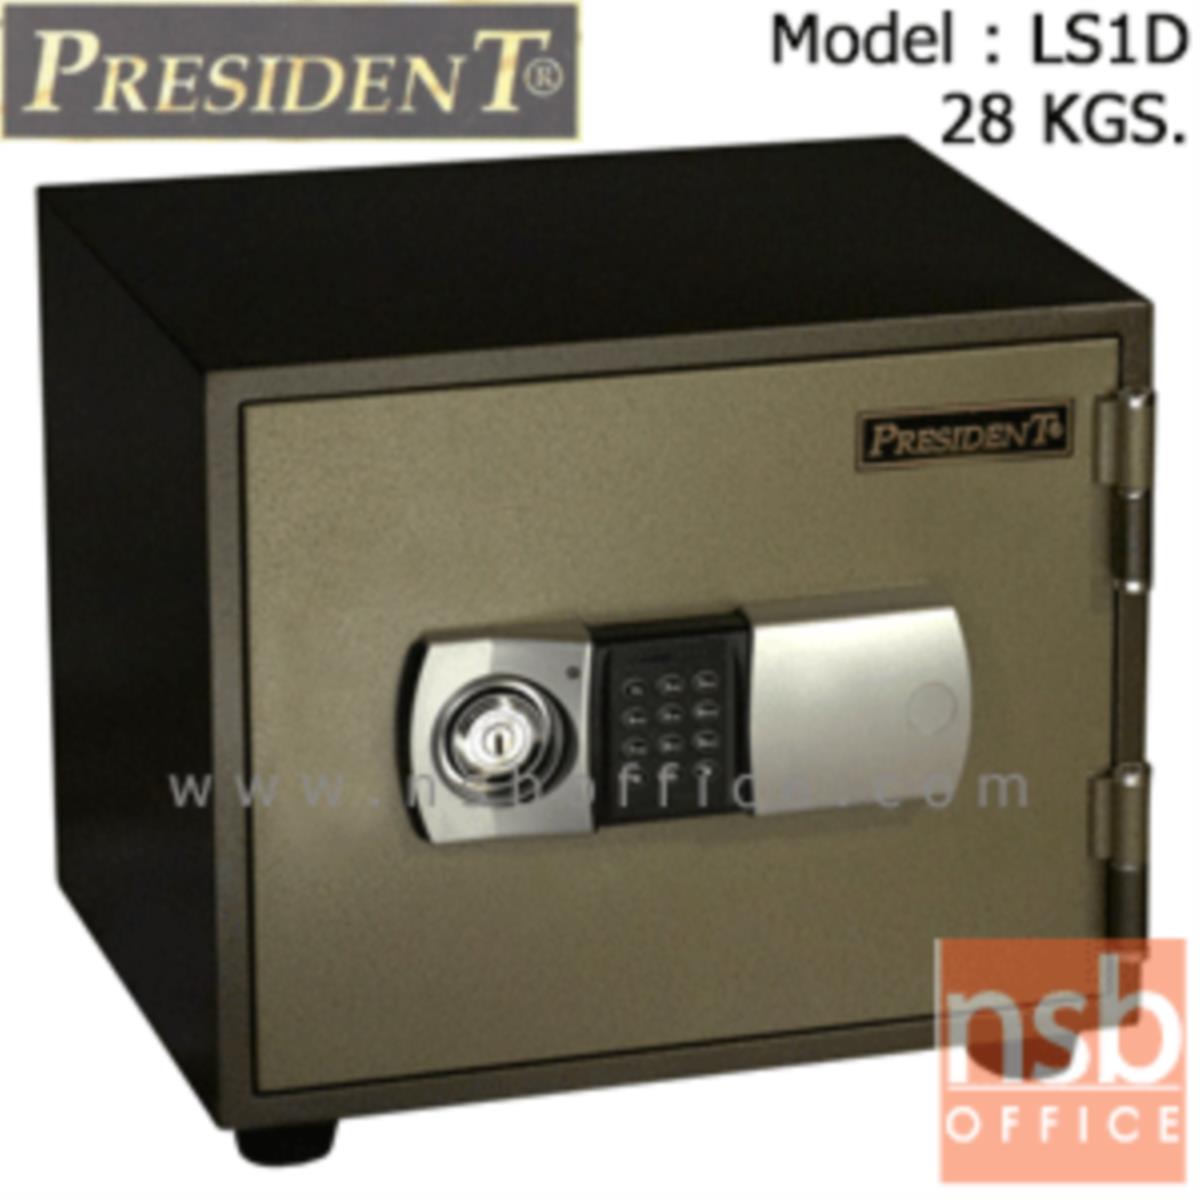 F05A020:ตู้เซฟนิรภัยชนิดดิจิตอล 28 กก. รุ่น PRESIDENT-LS1D  มี 1 กุญแจ 1 รหัส (รหัสใช้กดหน้าตู้)